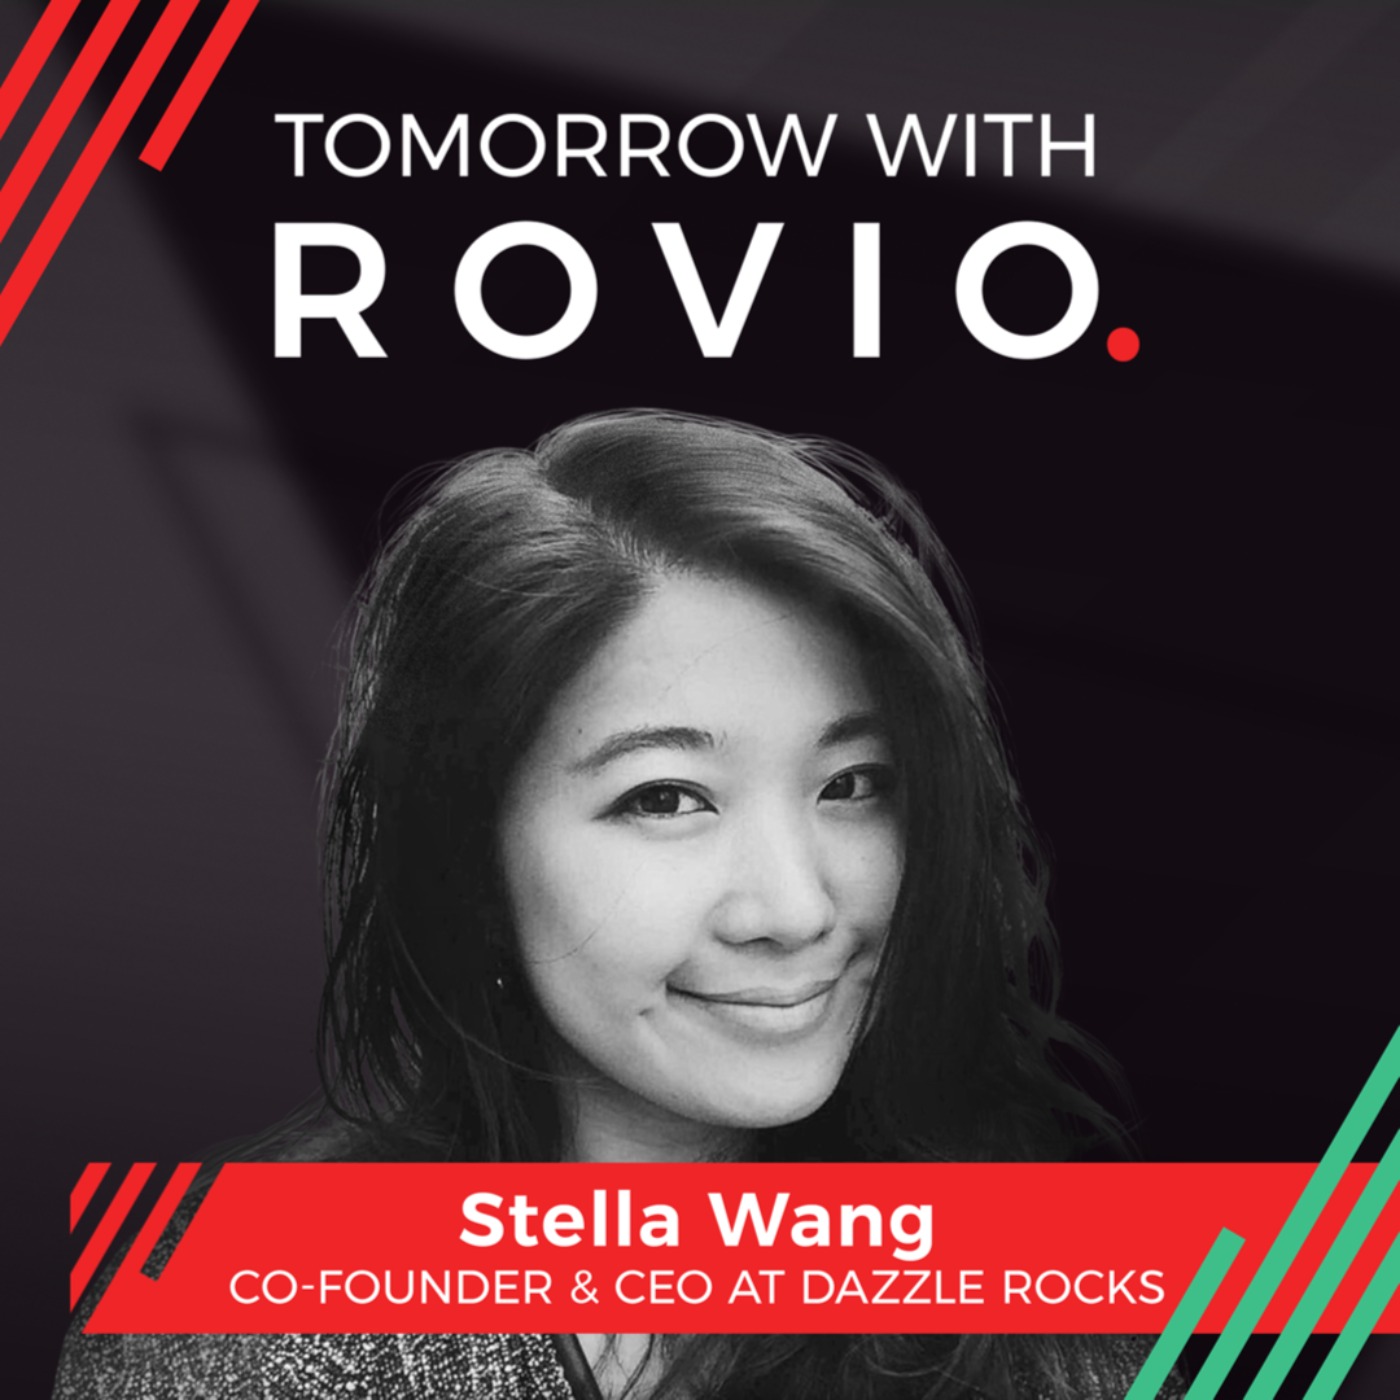 Stella Wang - Co-Founder & CEO at Dazzle Rocks